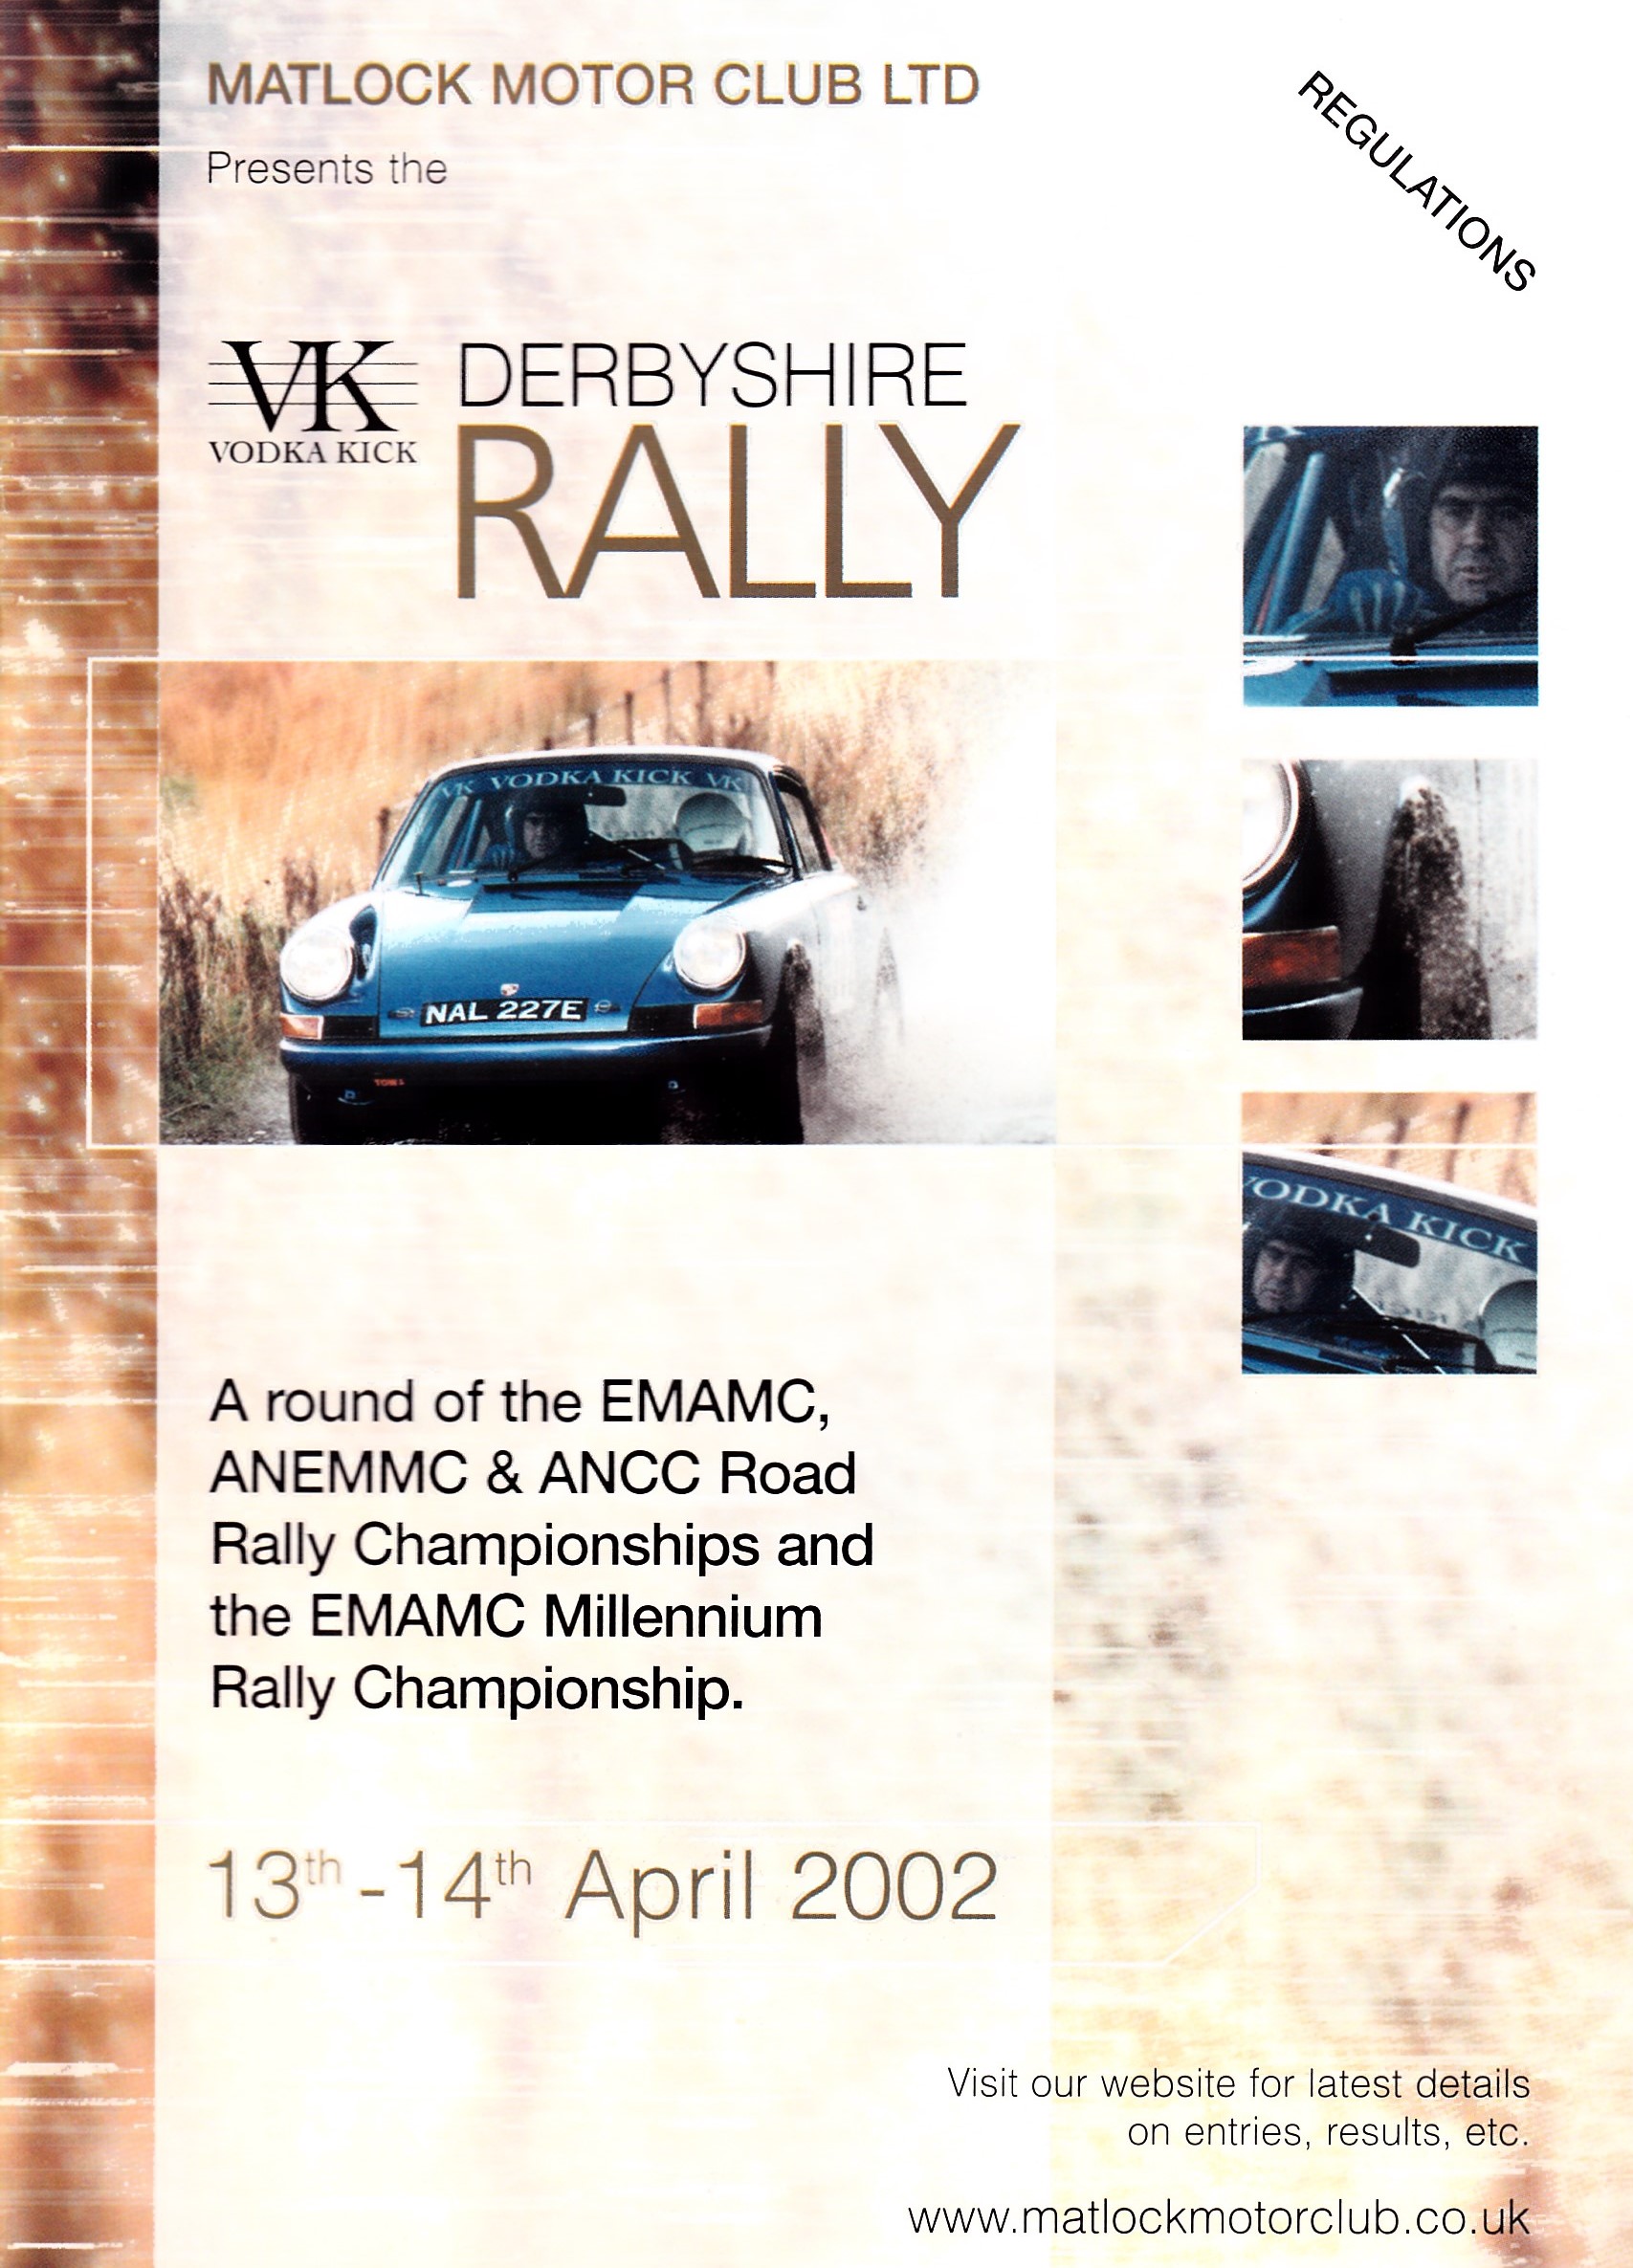 VK Derbyshire Rally 2002